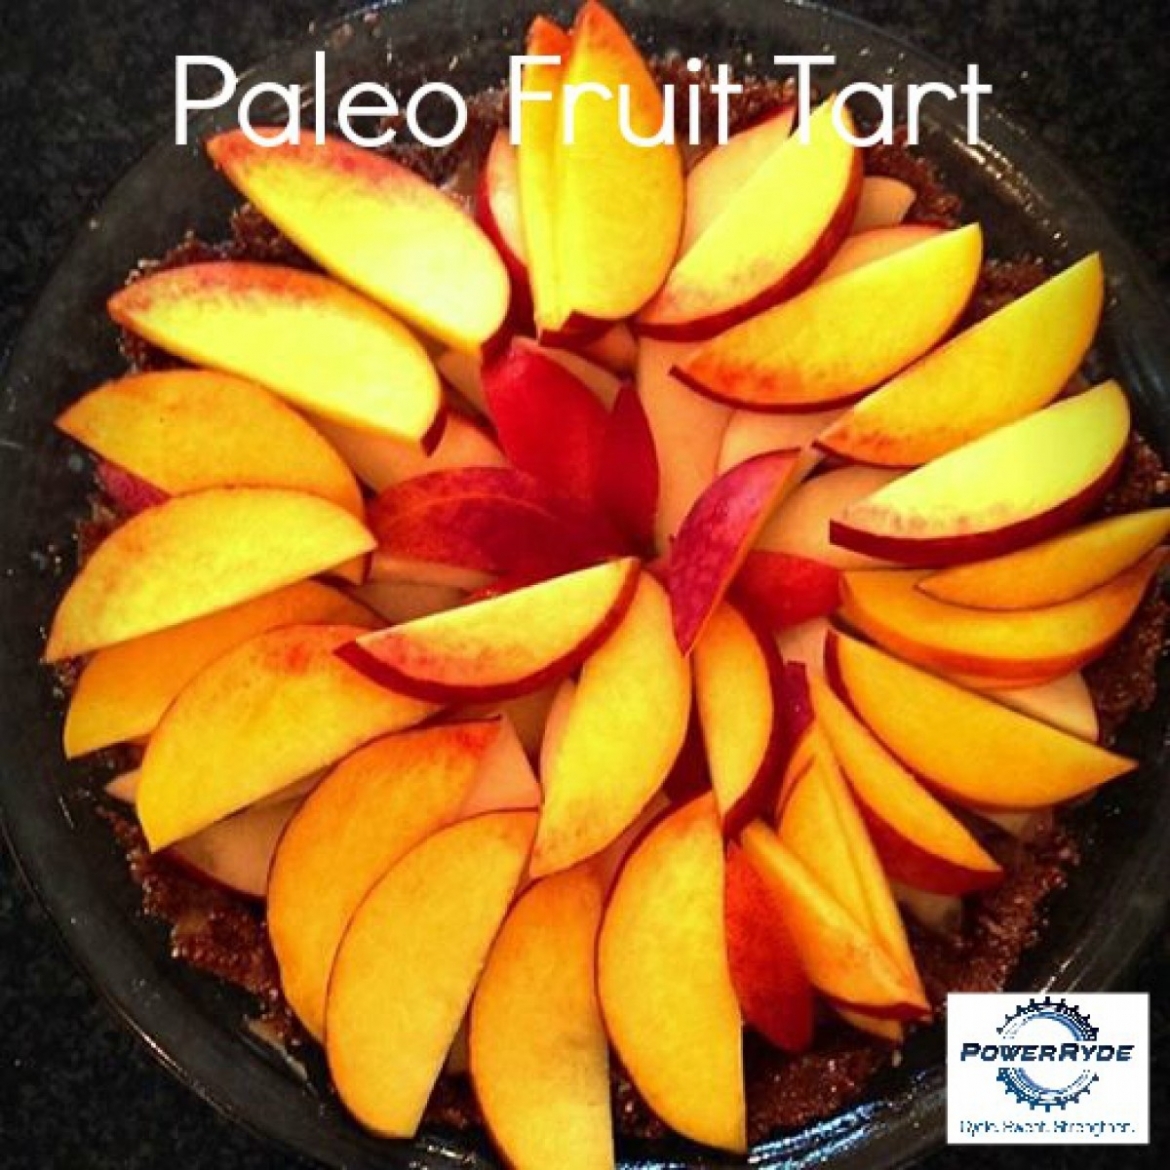 Paleo Fruit Tart tray with PowerRyde logo